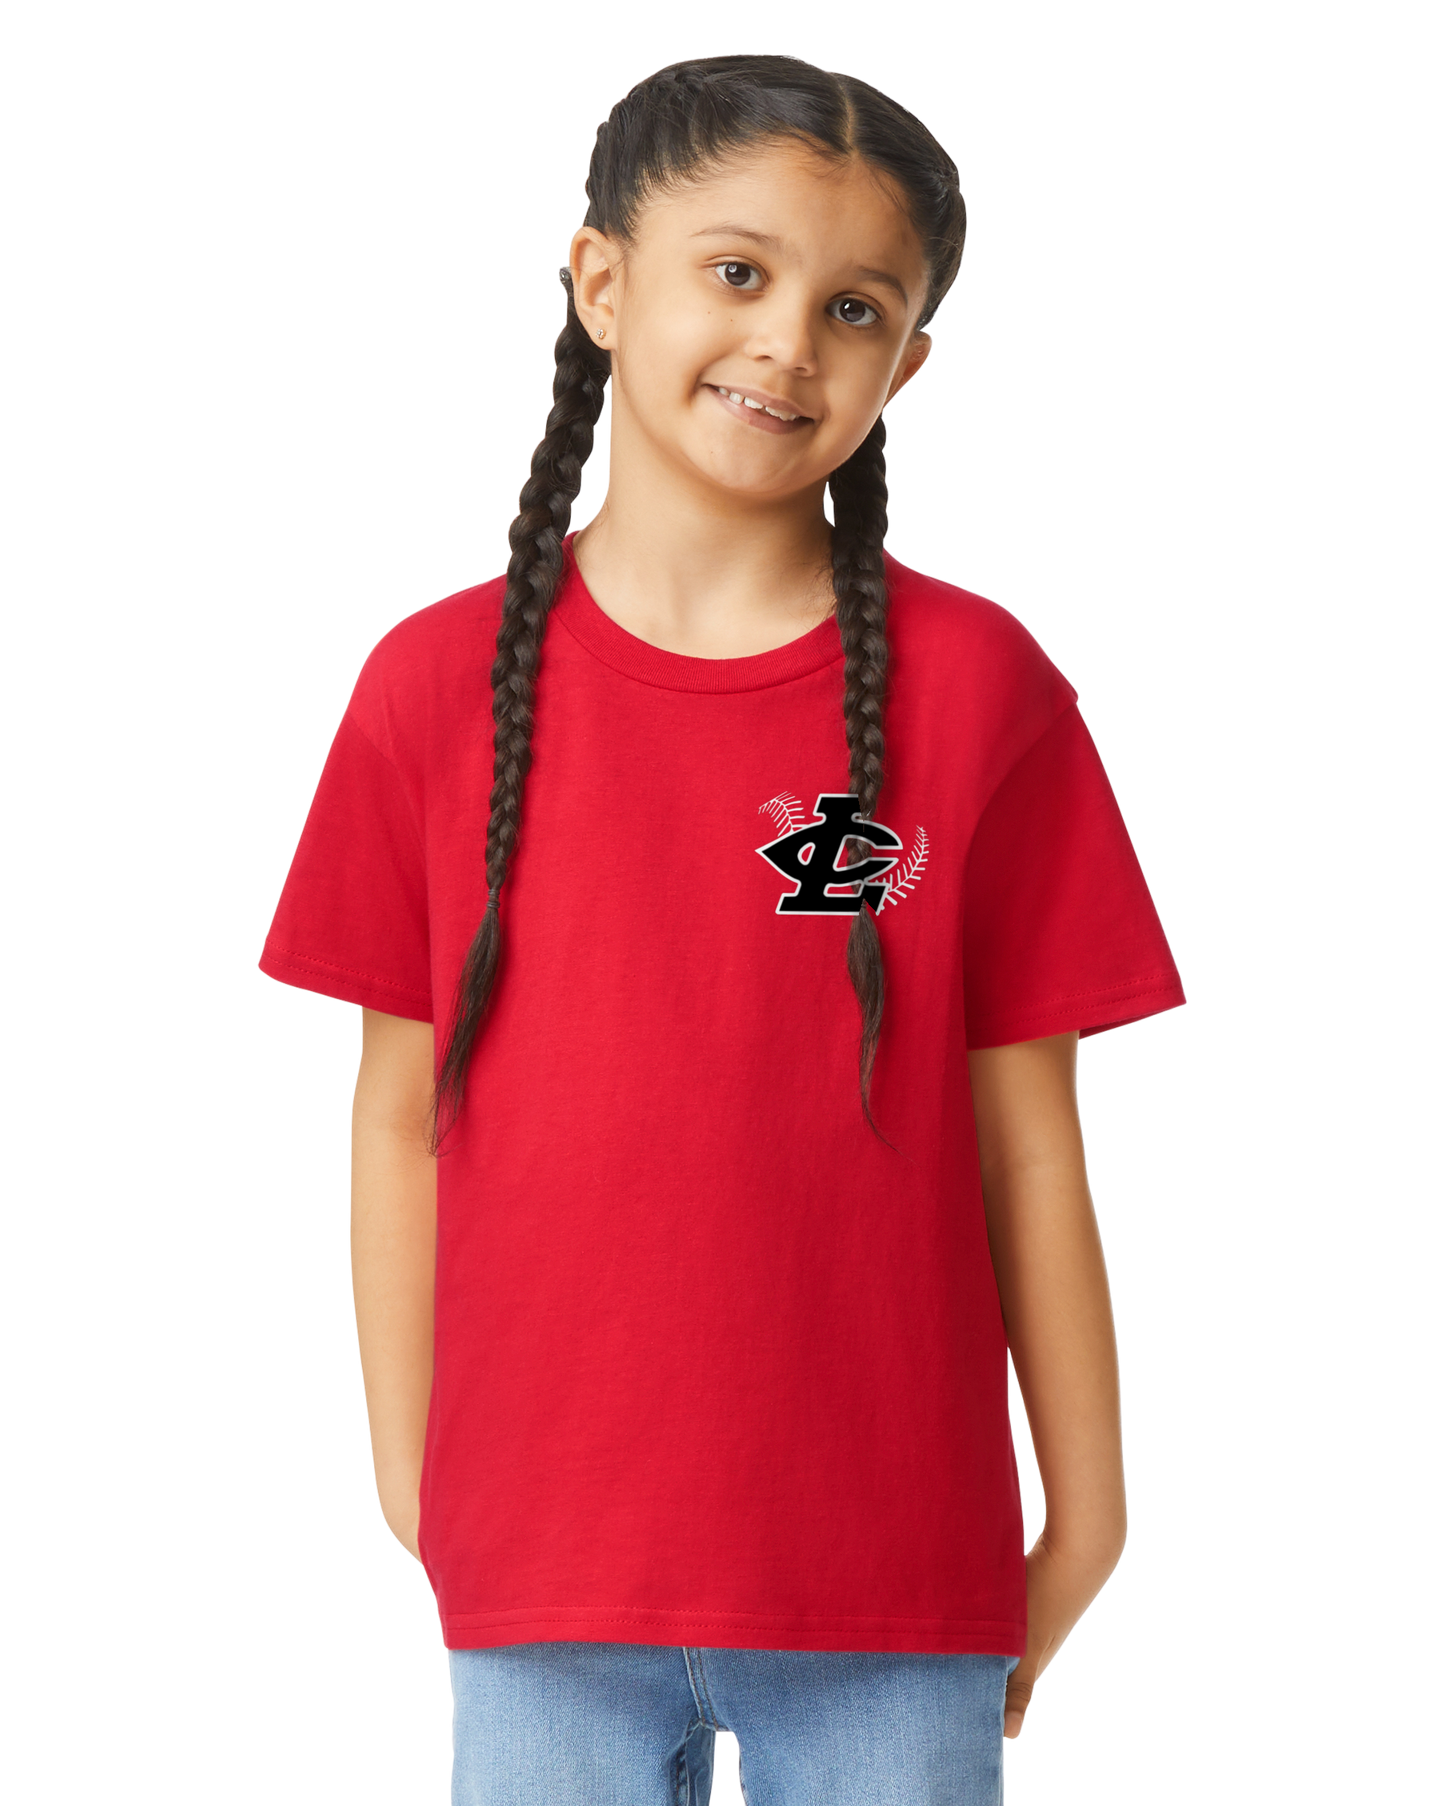 CLLL Youth Gildan Softstyle tshirt - RED